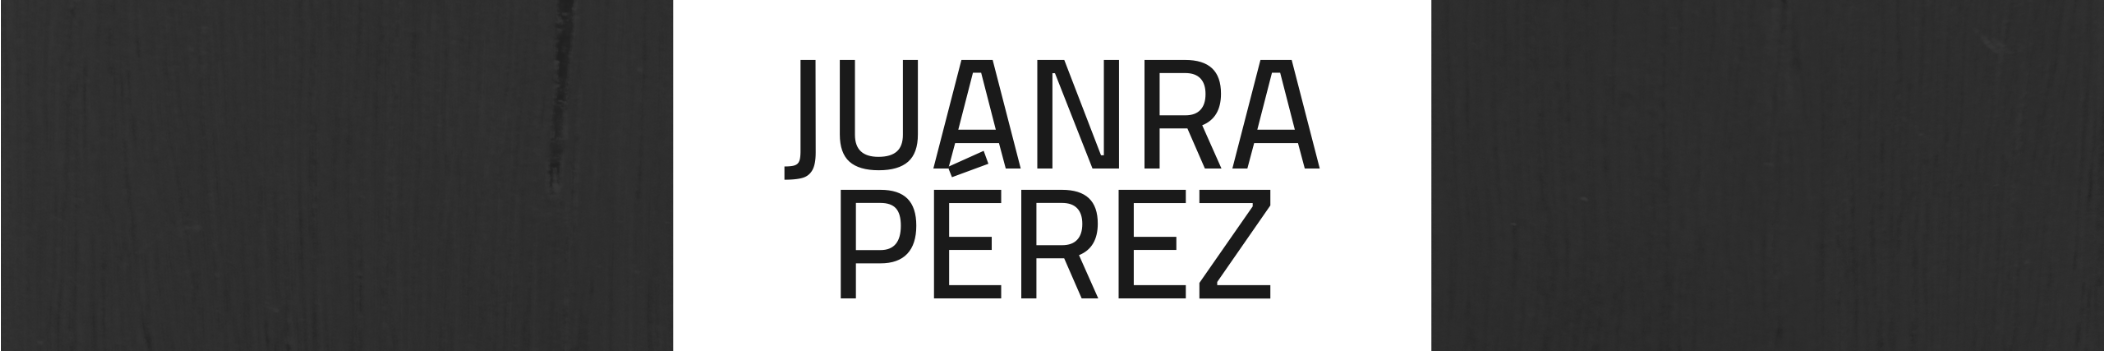 Juanra Pérez